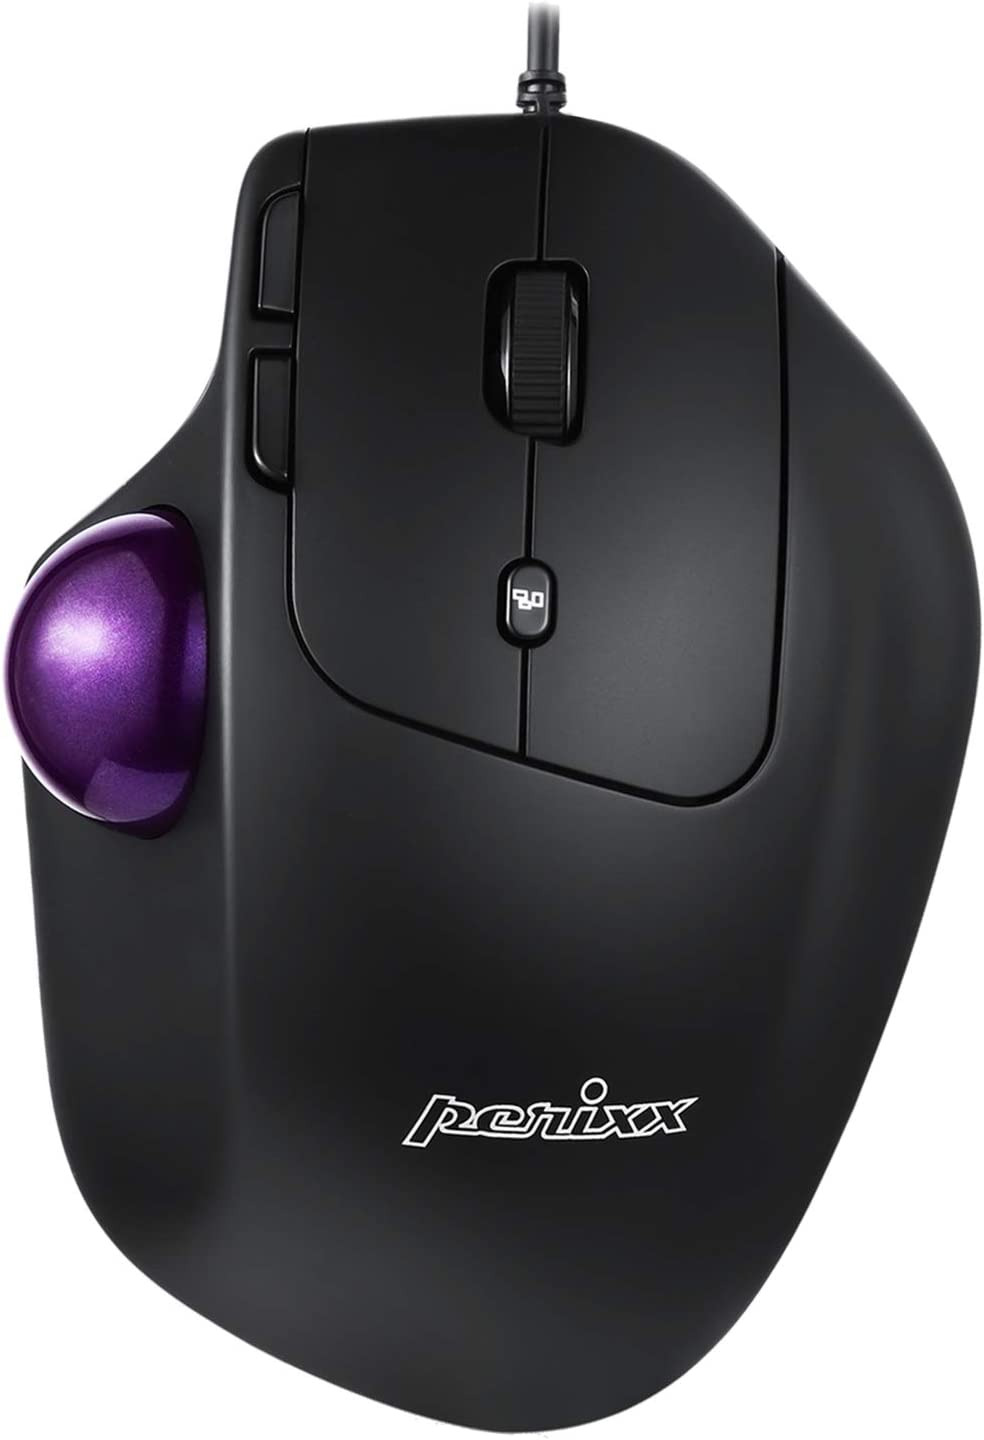 PERIMICE-520 Wired USB Ergonomic Programmable Trackball Mouse